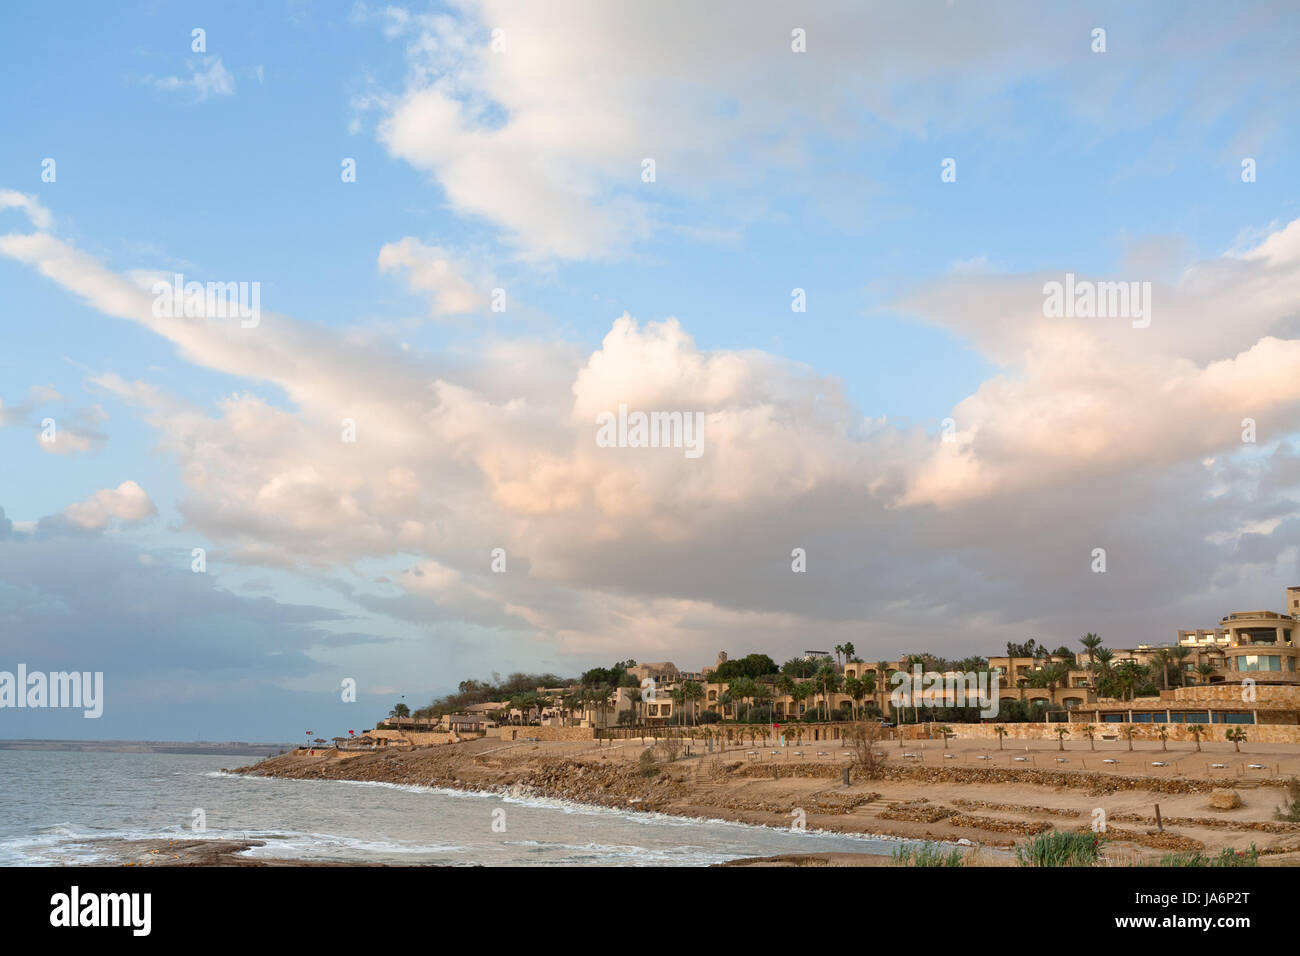 blue, salt, horizon, sunset, cloud, beach, seaside, the beach, seashore, hotel, Stock Photo